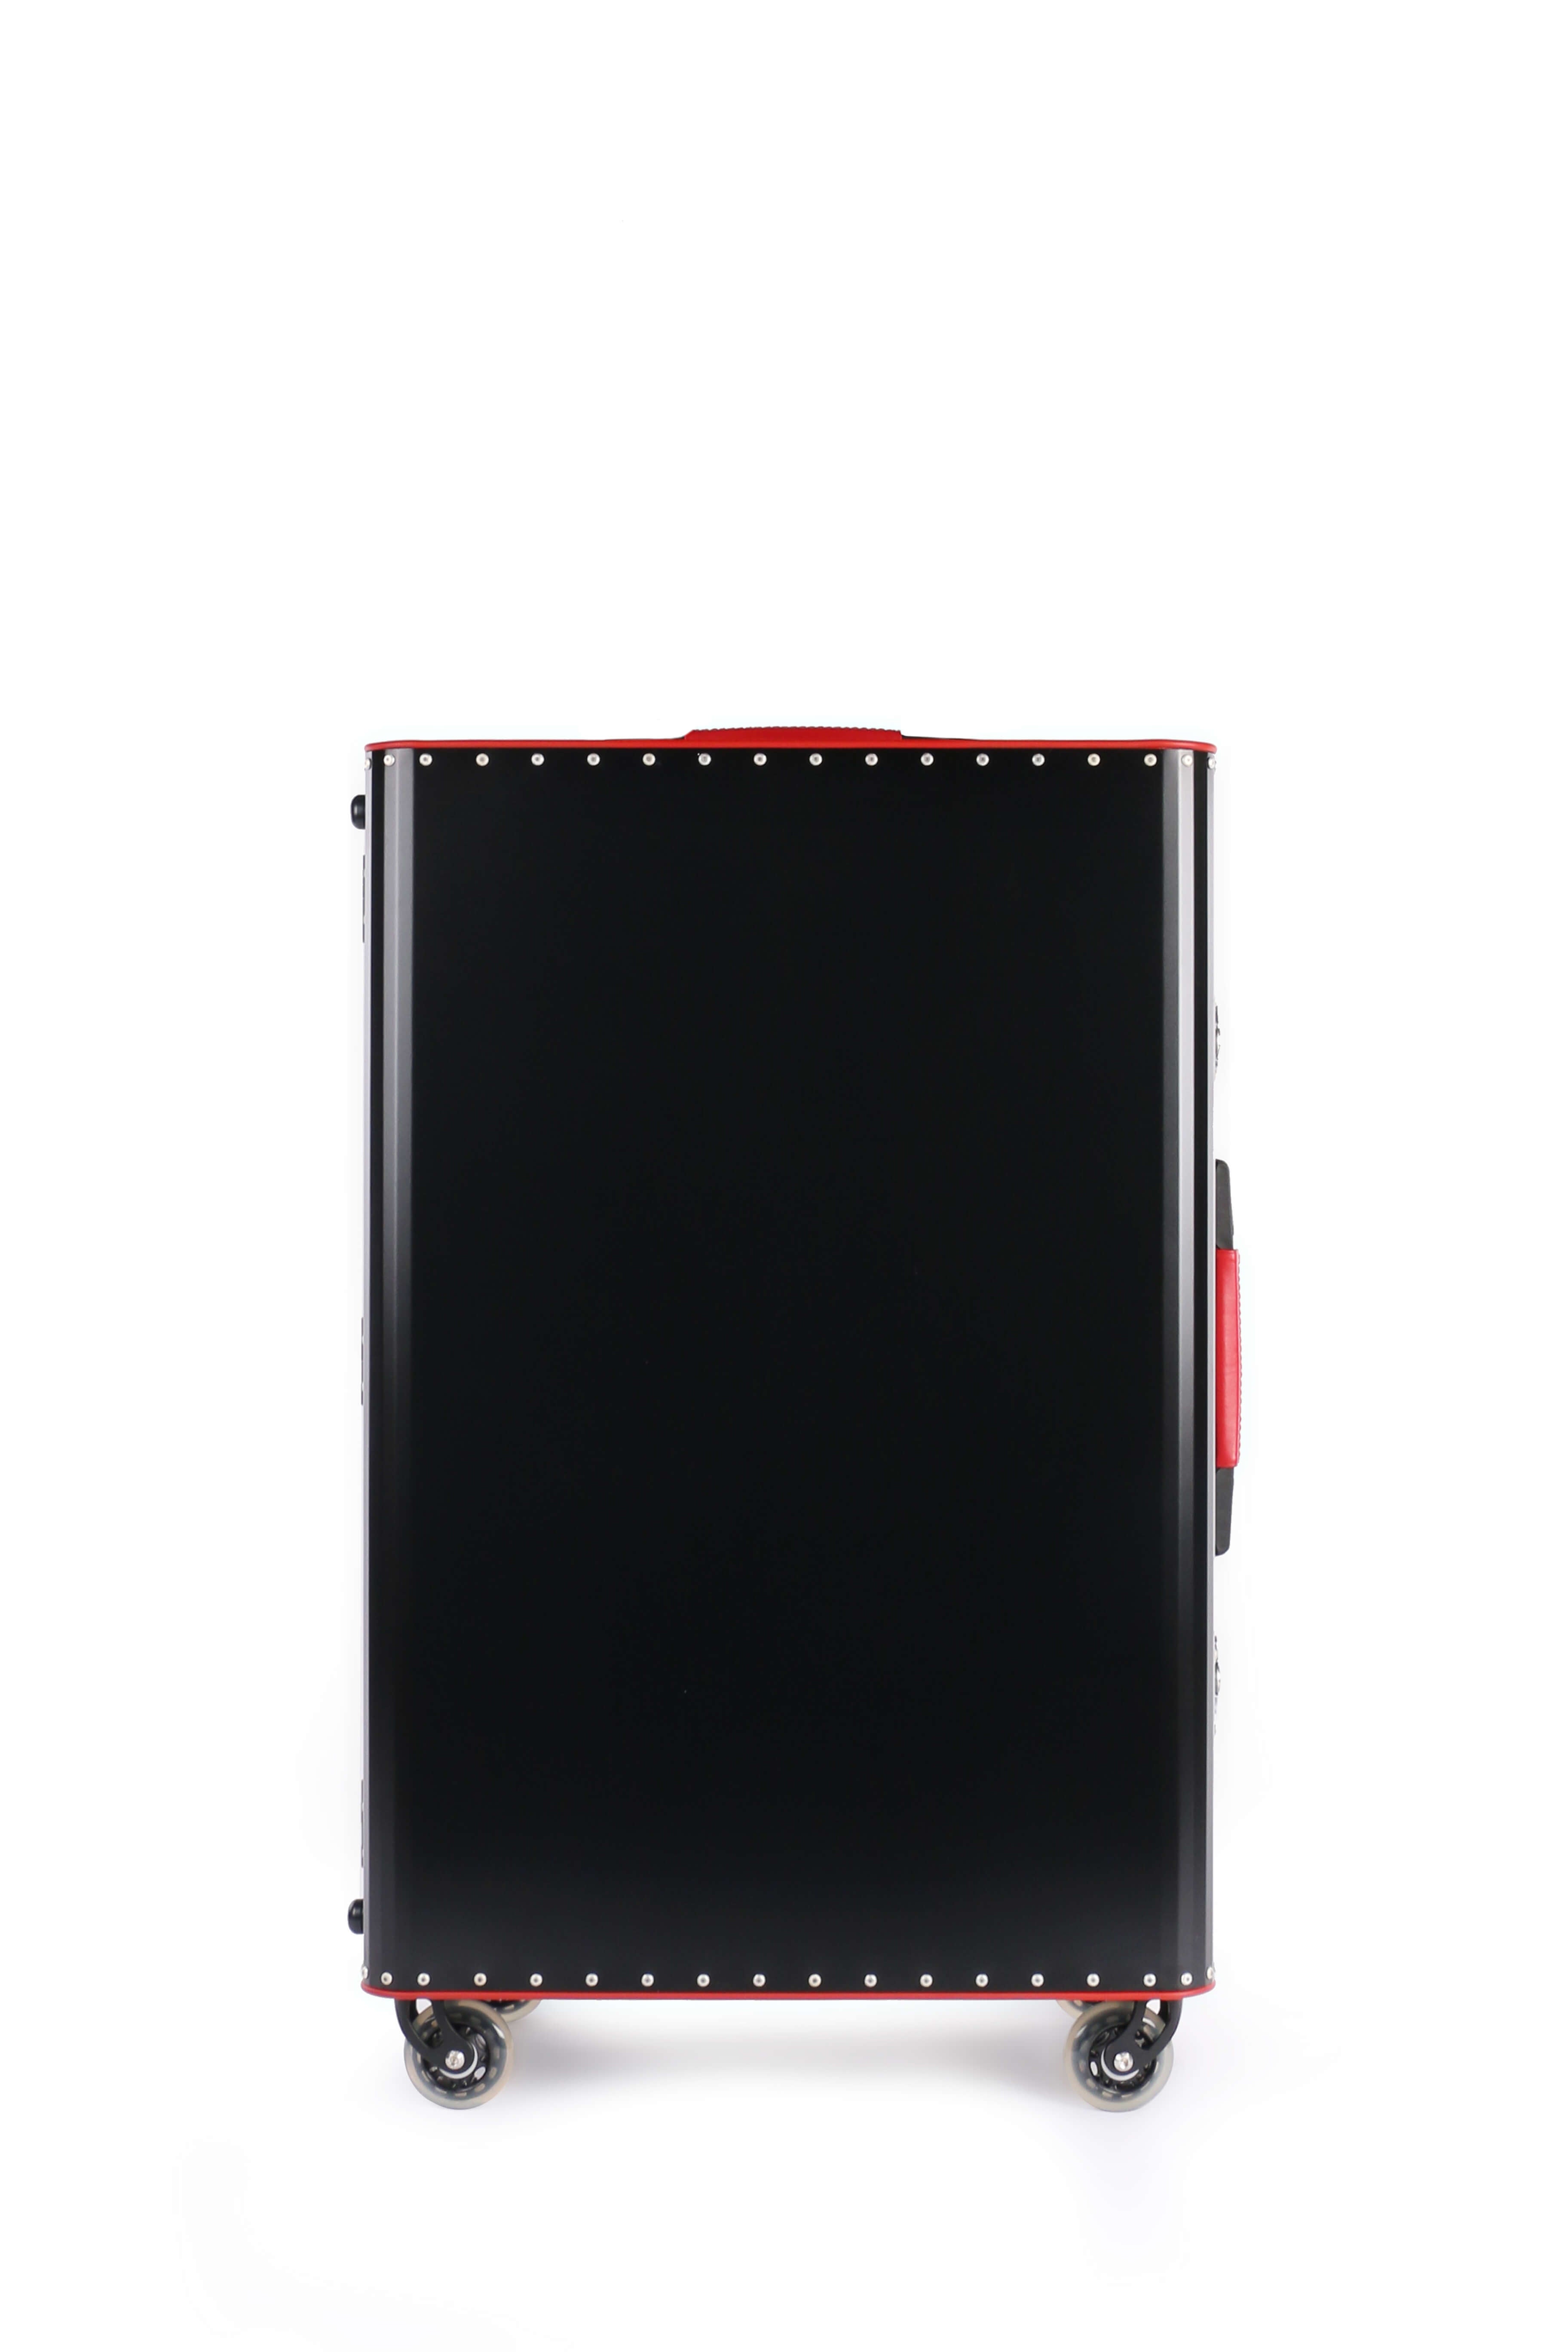 Kronos Black Titanium Check-In Luggage, Red